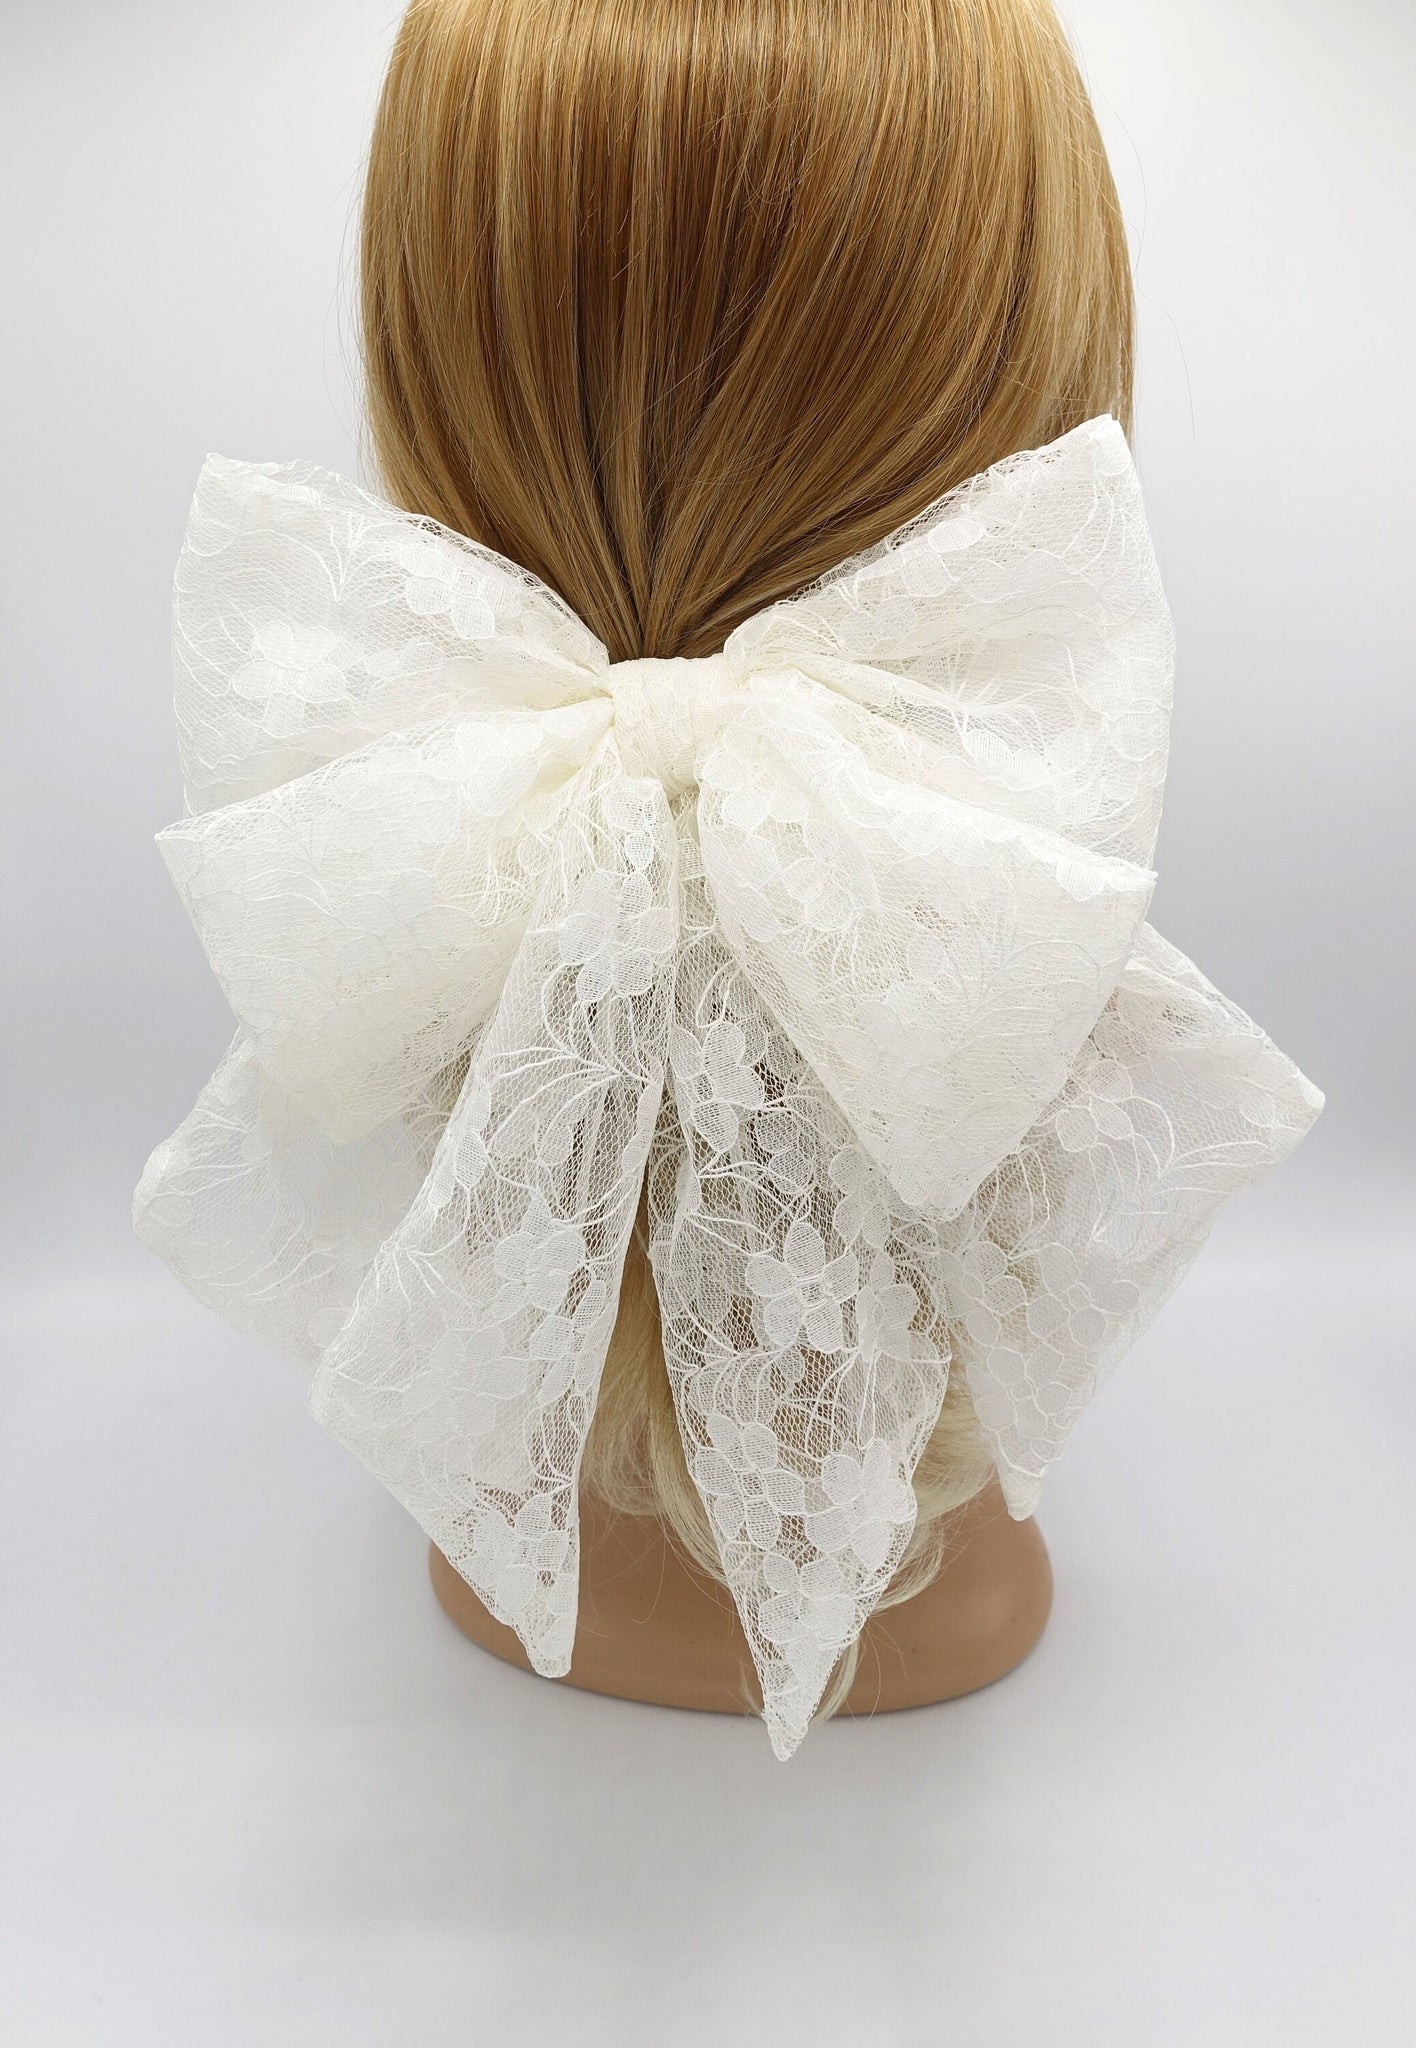 veryshine.com Barrette (Bow) Cream white giant lace hair bow, bridal hair bow, VeryShine hair bow for women